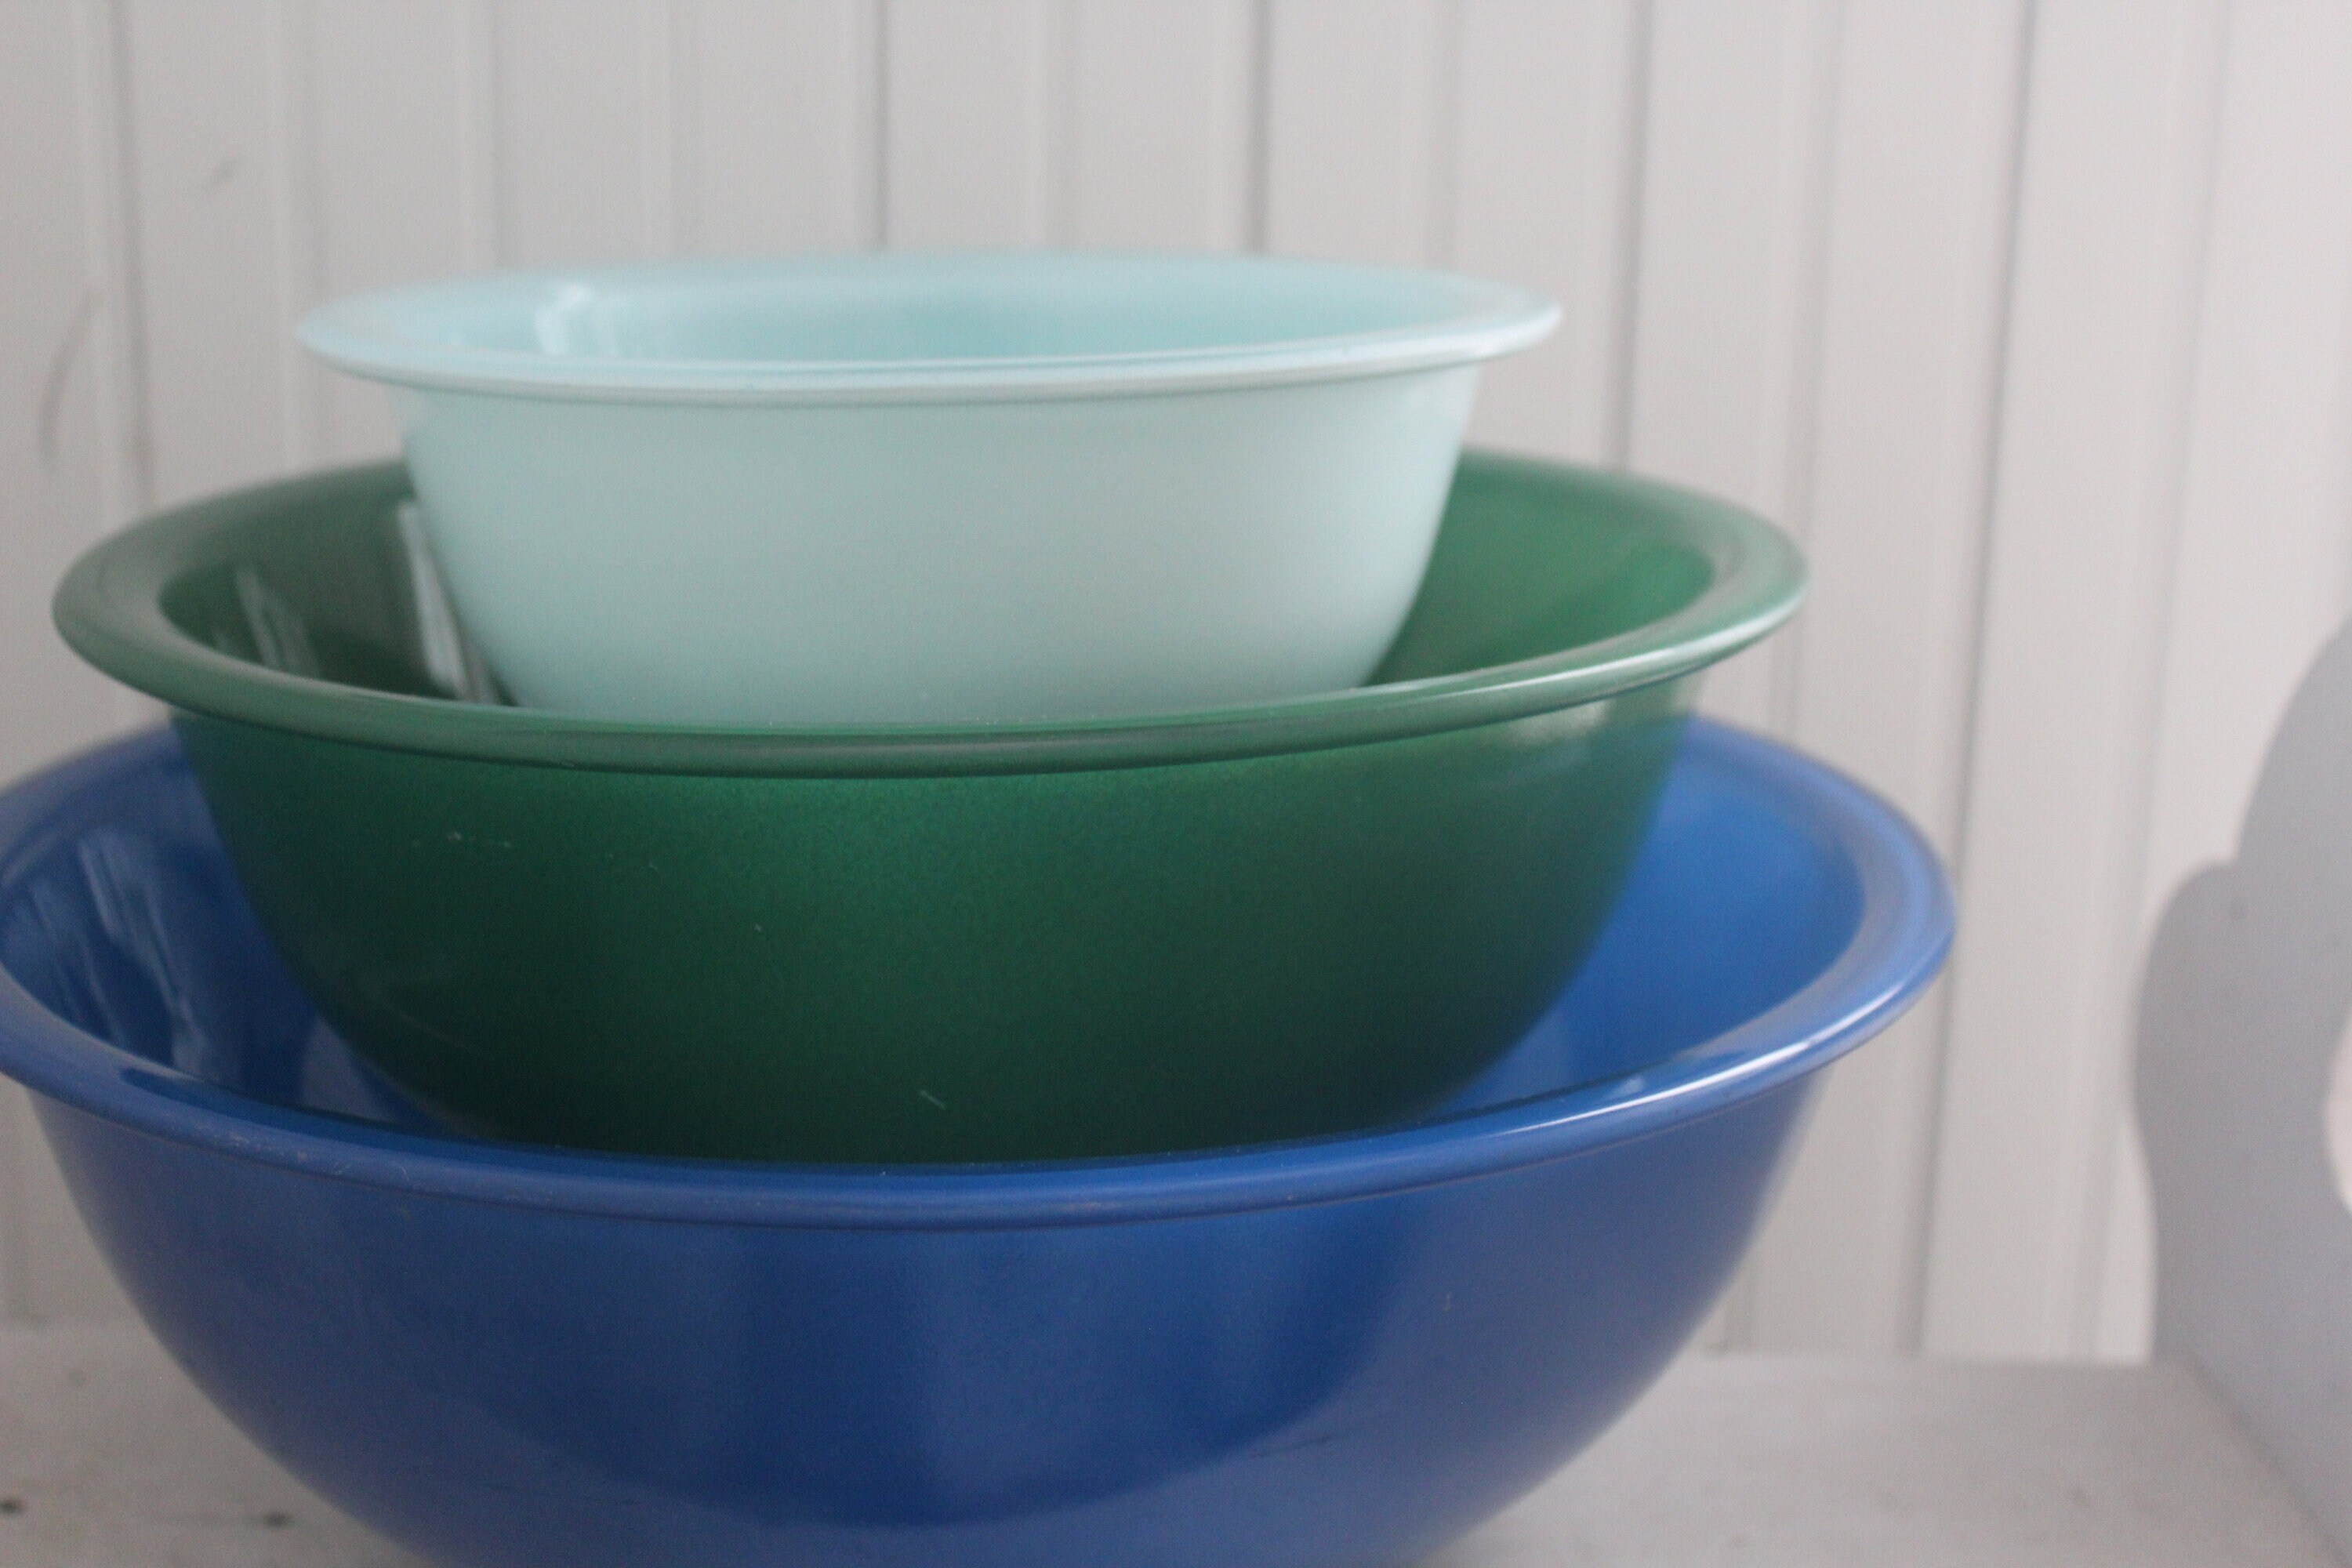 Vintage Pyrex Blue Green Mixing Bowl Set 1980s Pyrex Mixing Bowls 322, 325,  326 3-pc Pyrex Mixing Bowl Set Retro Kitchen Bowl Set -  Israel